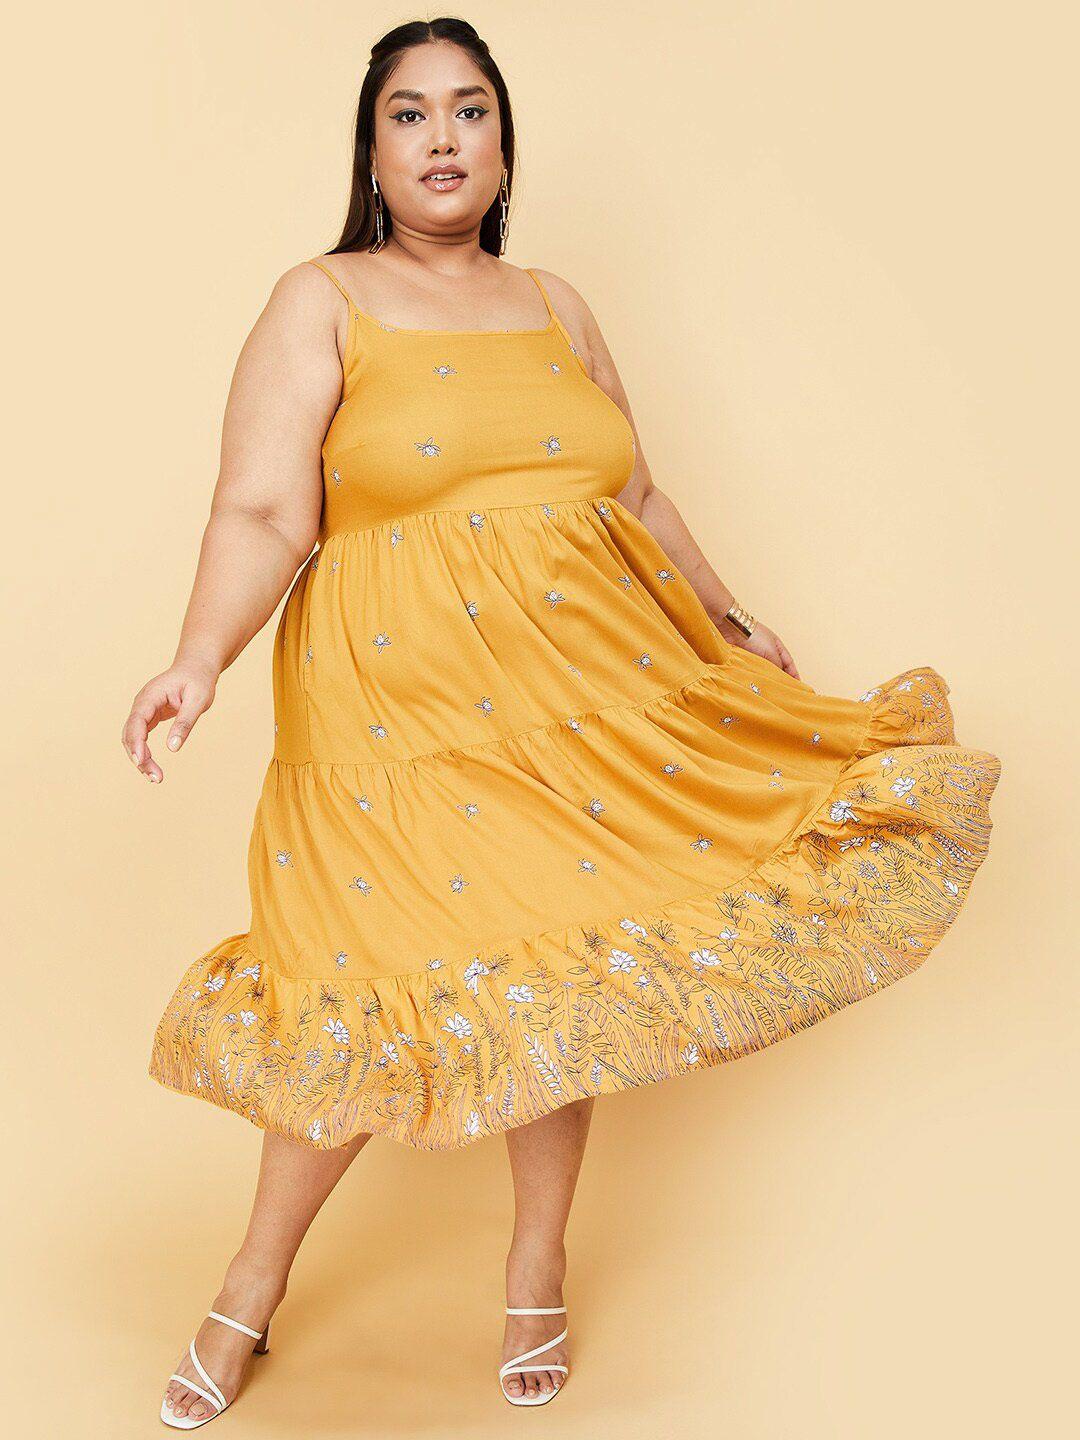 max mustard yellow floral ethnic a-line midi dress